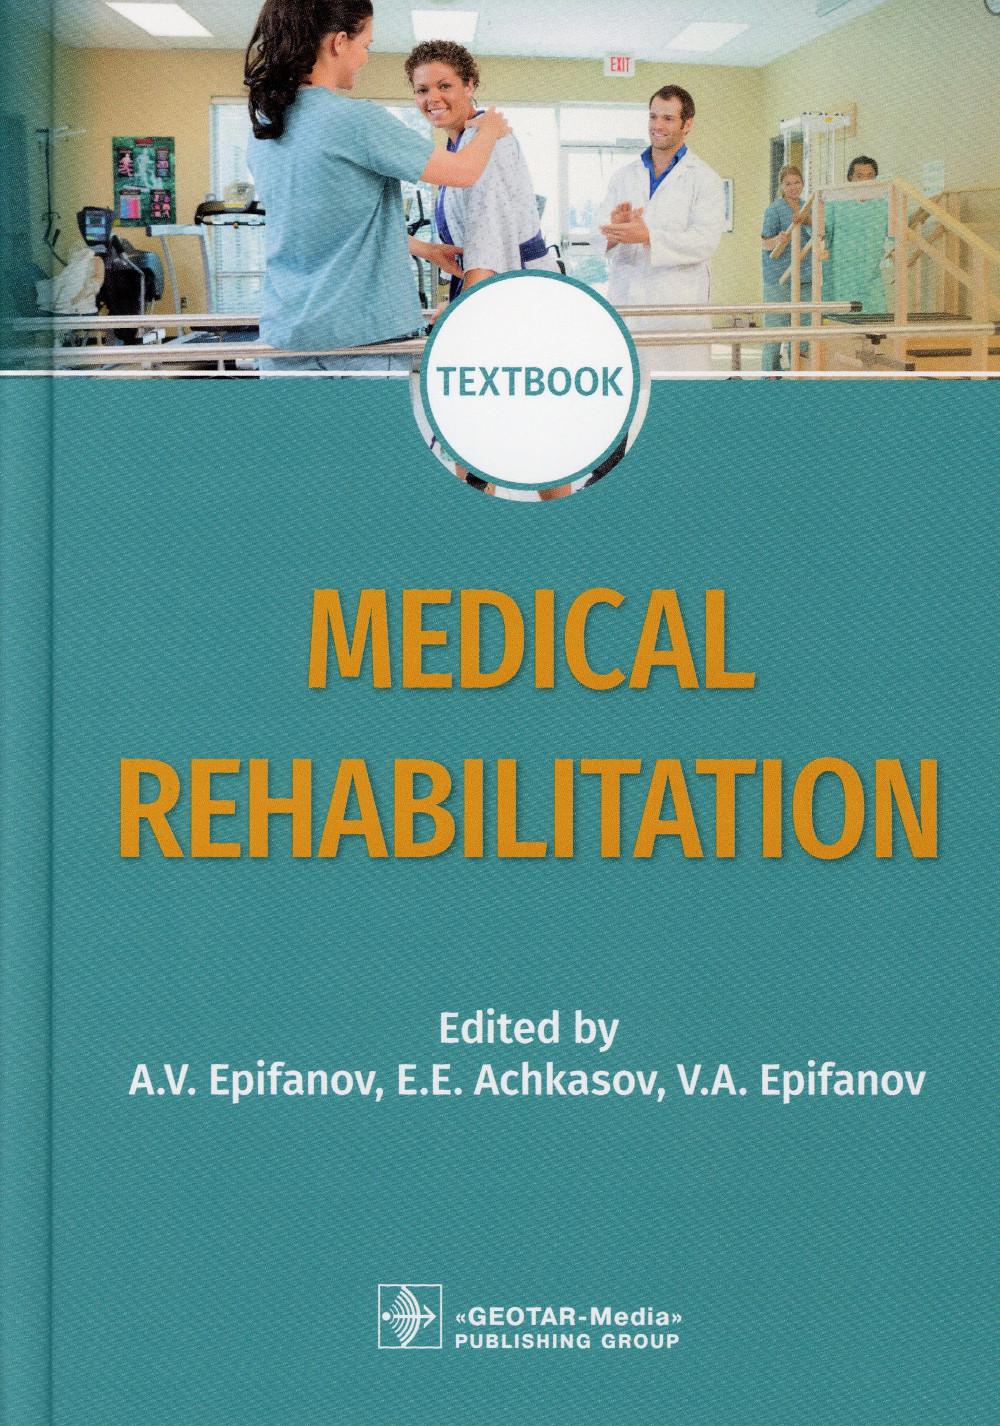 Medical rehabilitation : textbook / edited by A. V. Epifanov, E. E. Achkasov, V. A. Epifanov.  Moscow : GEOTAR-Media, 2022.  664 p. : ill.